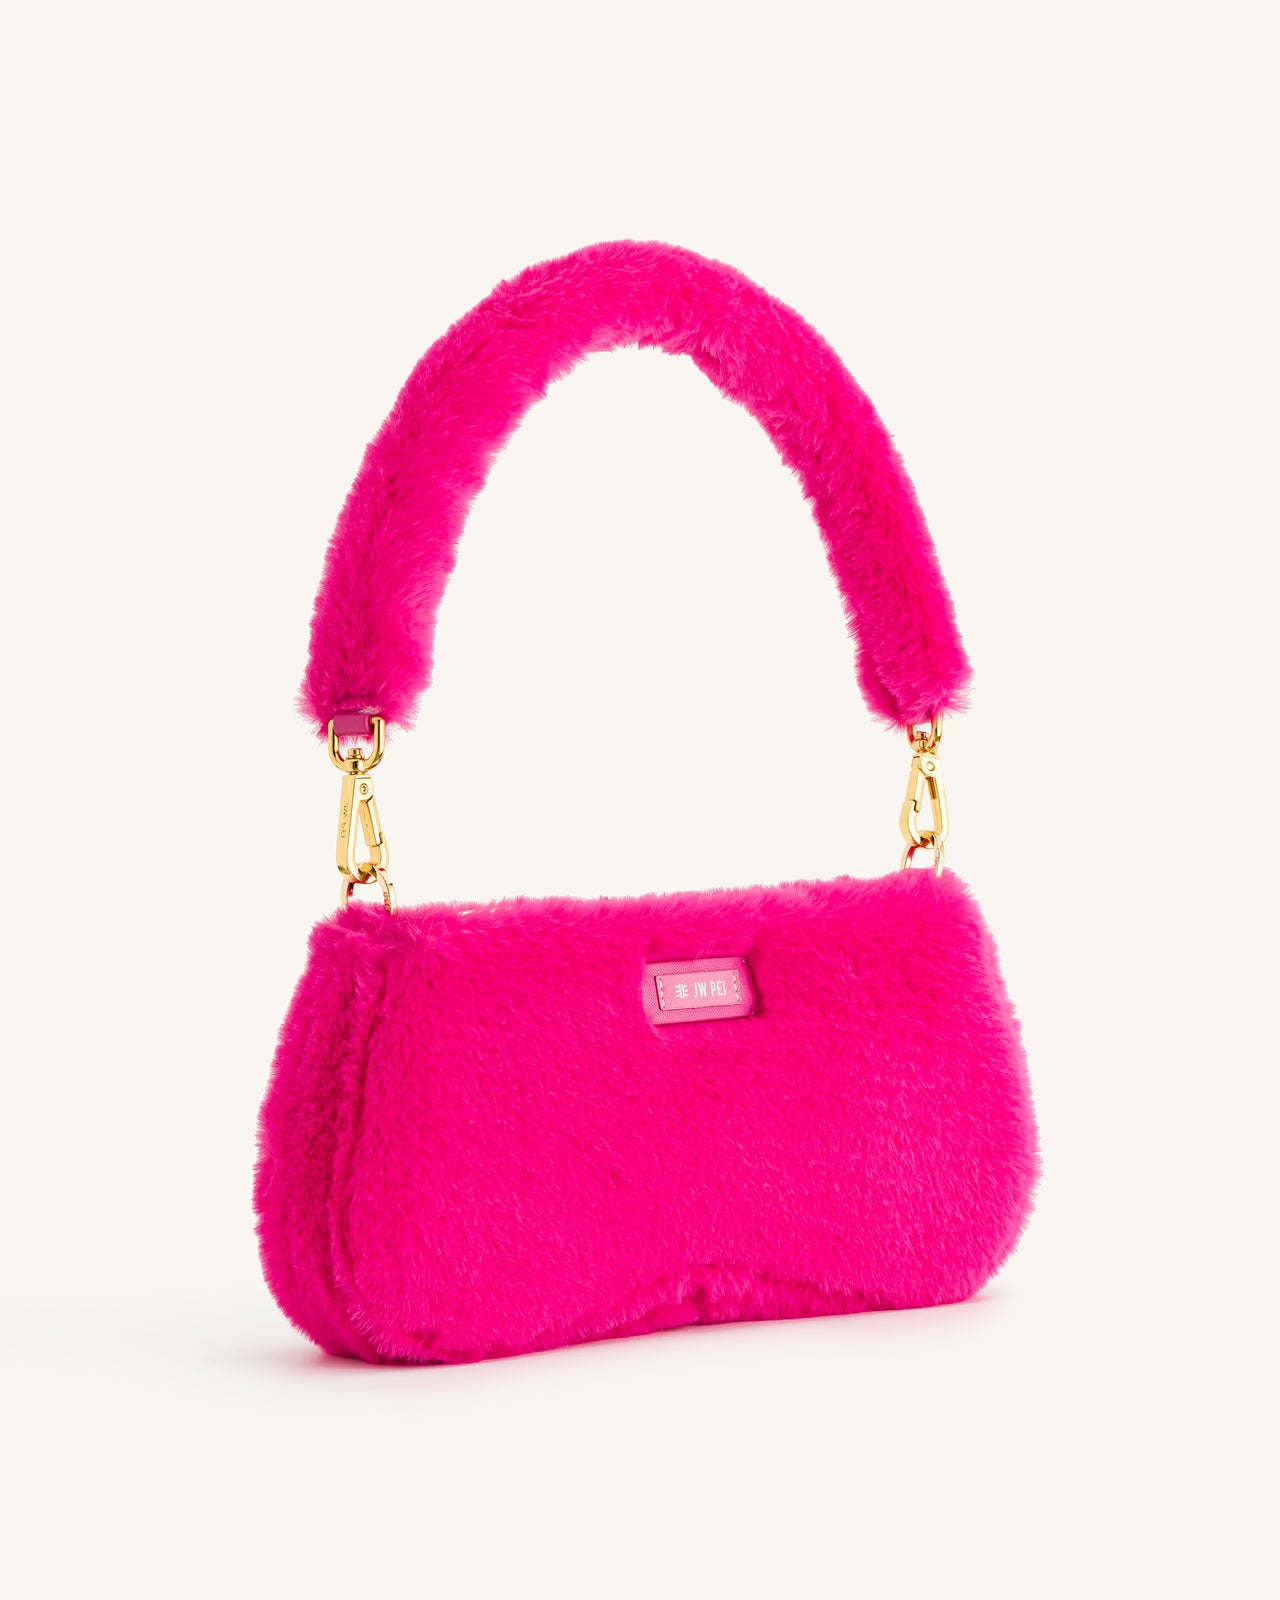 Eva Faux Fur Fabric Shoulder Bag - Hot Pink